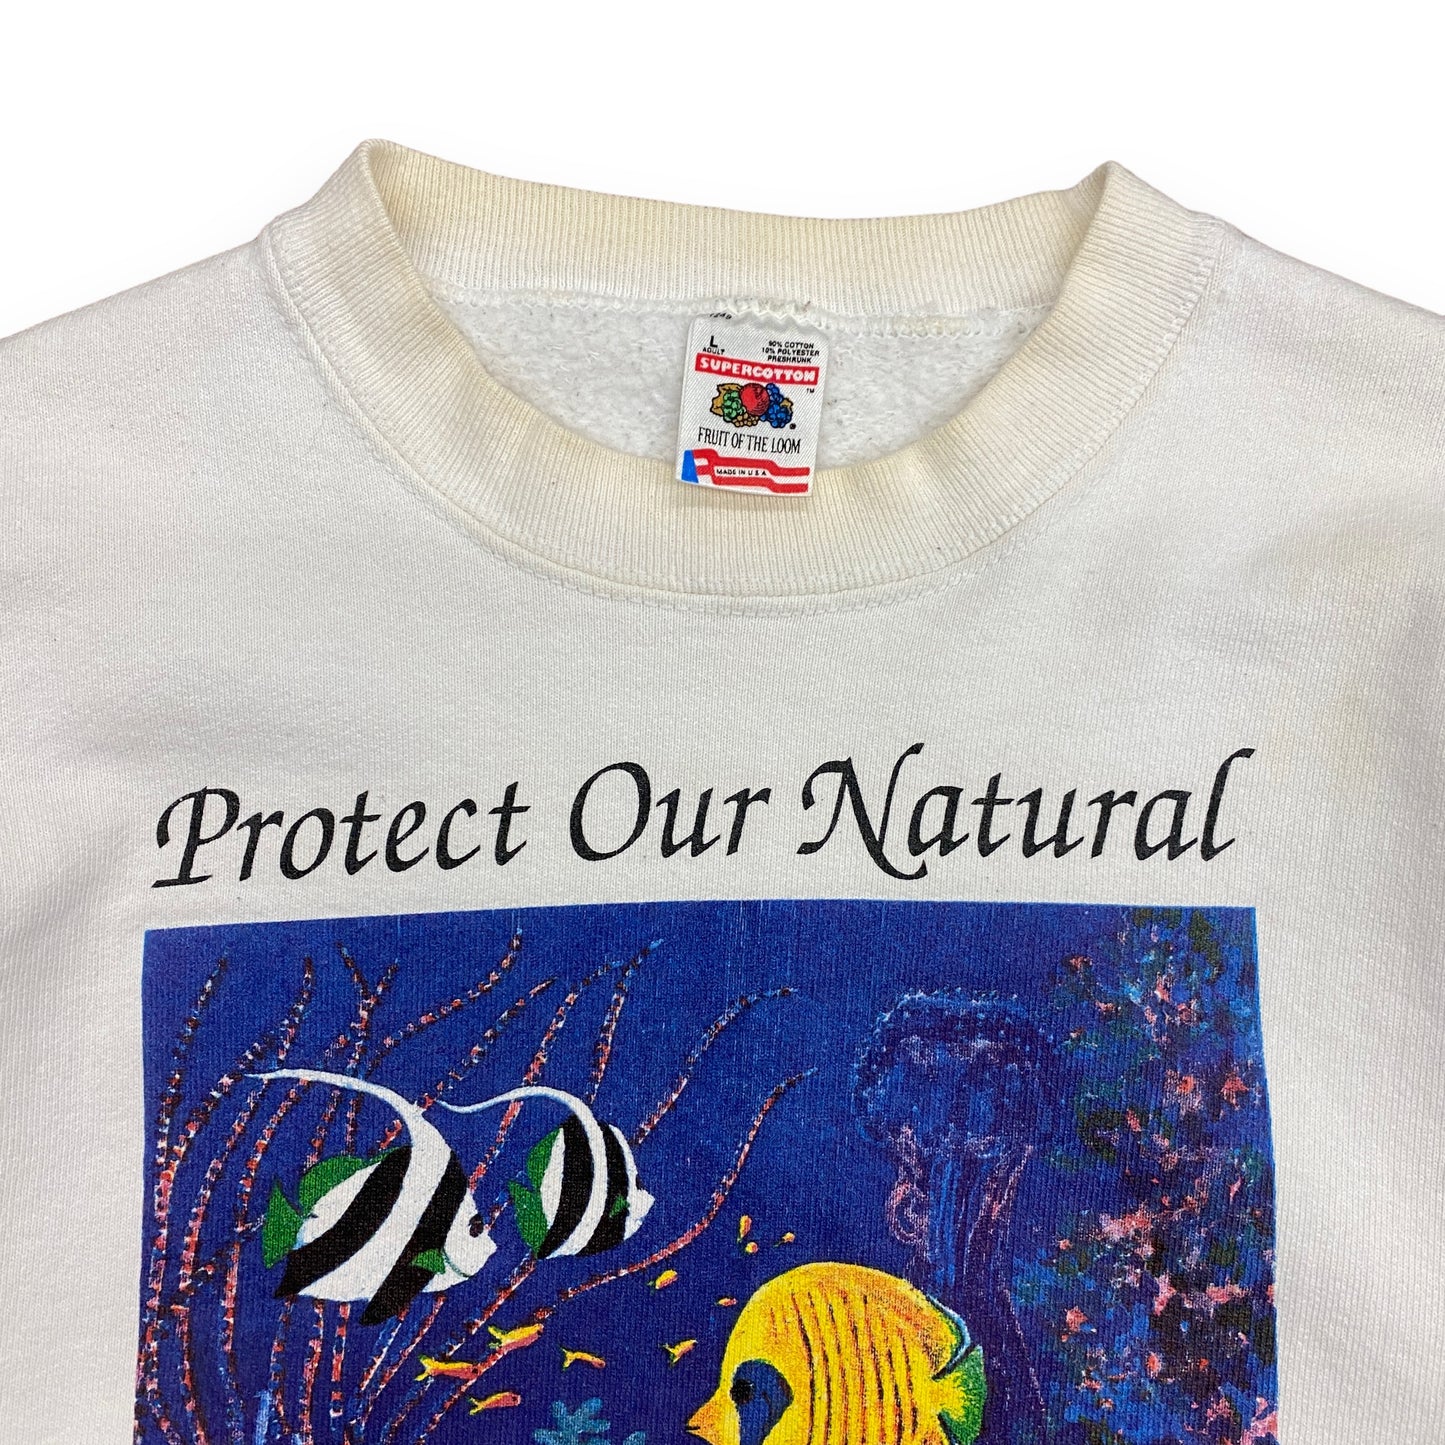 1990 "Protect Our Natural Treasures" Human-i-Tees Sweatshirt - Size Large